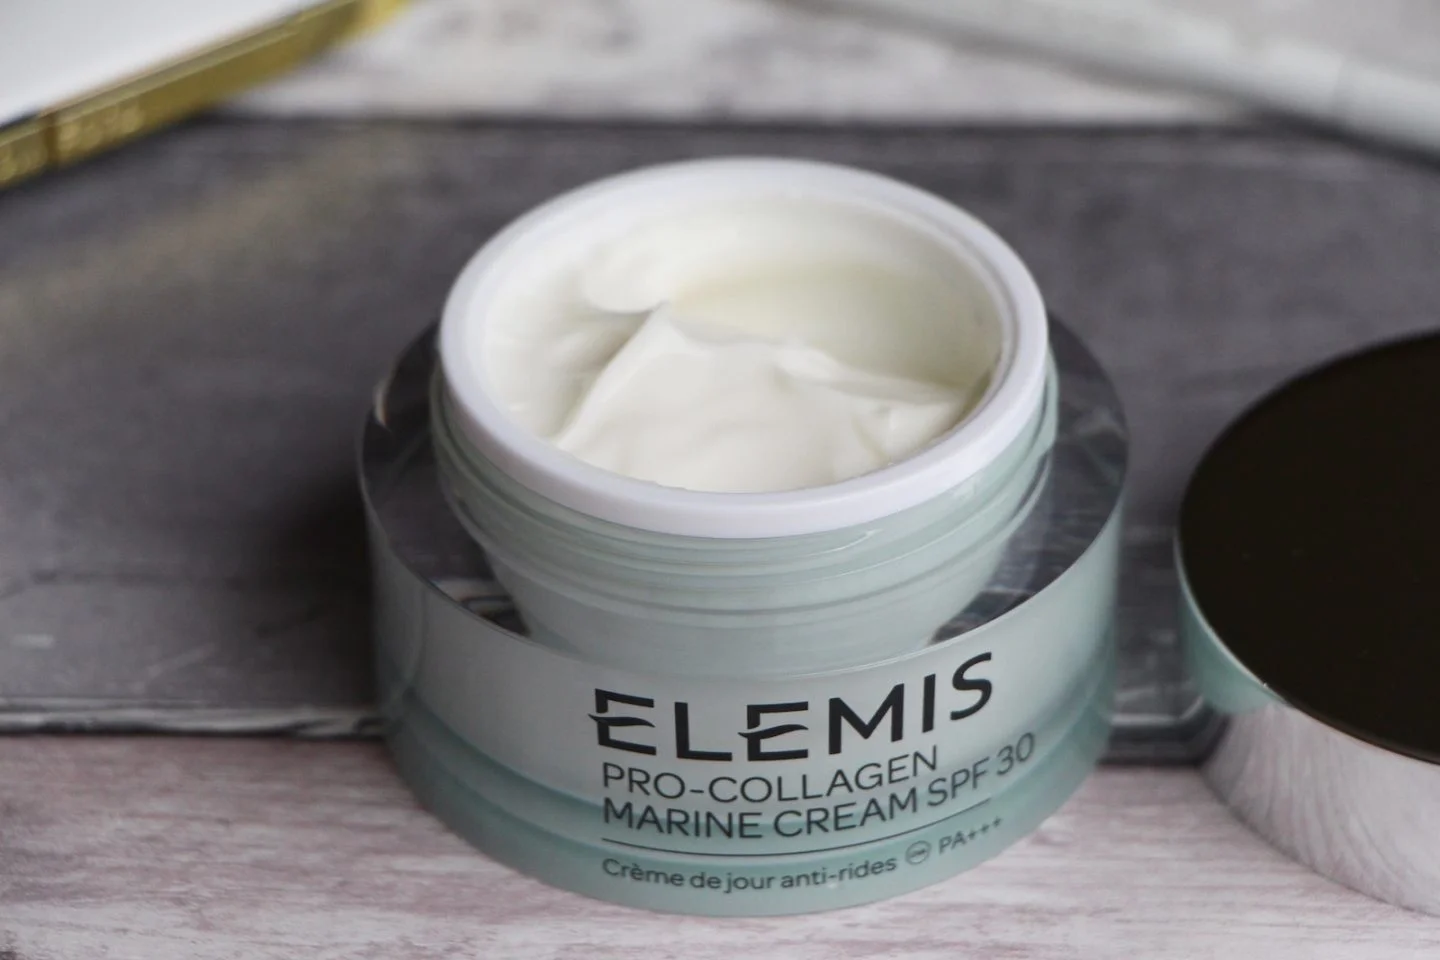 Elemis Pro-Collagen Marine Cream SPF30 review